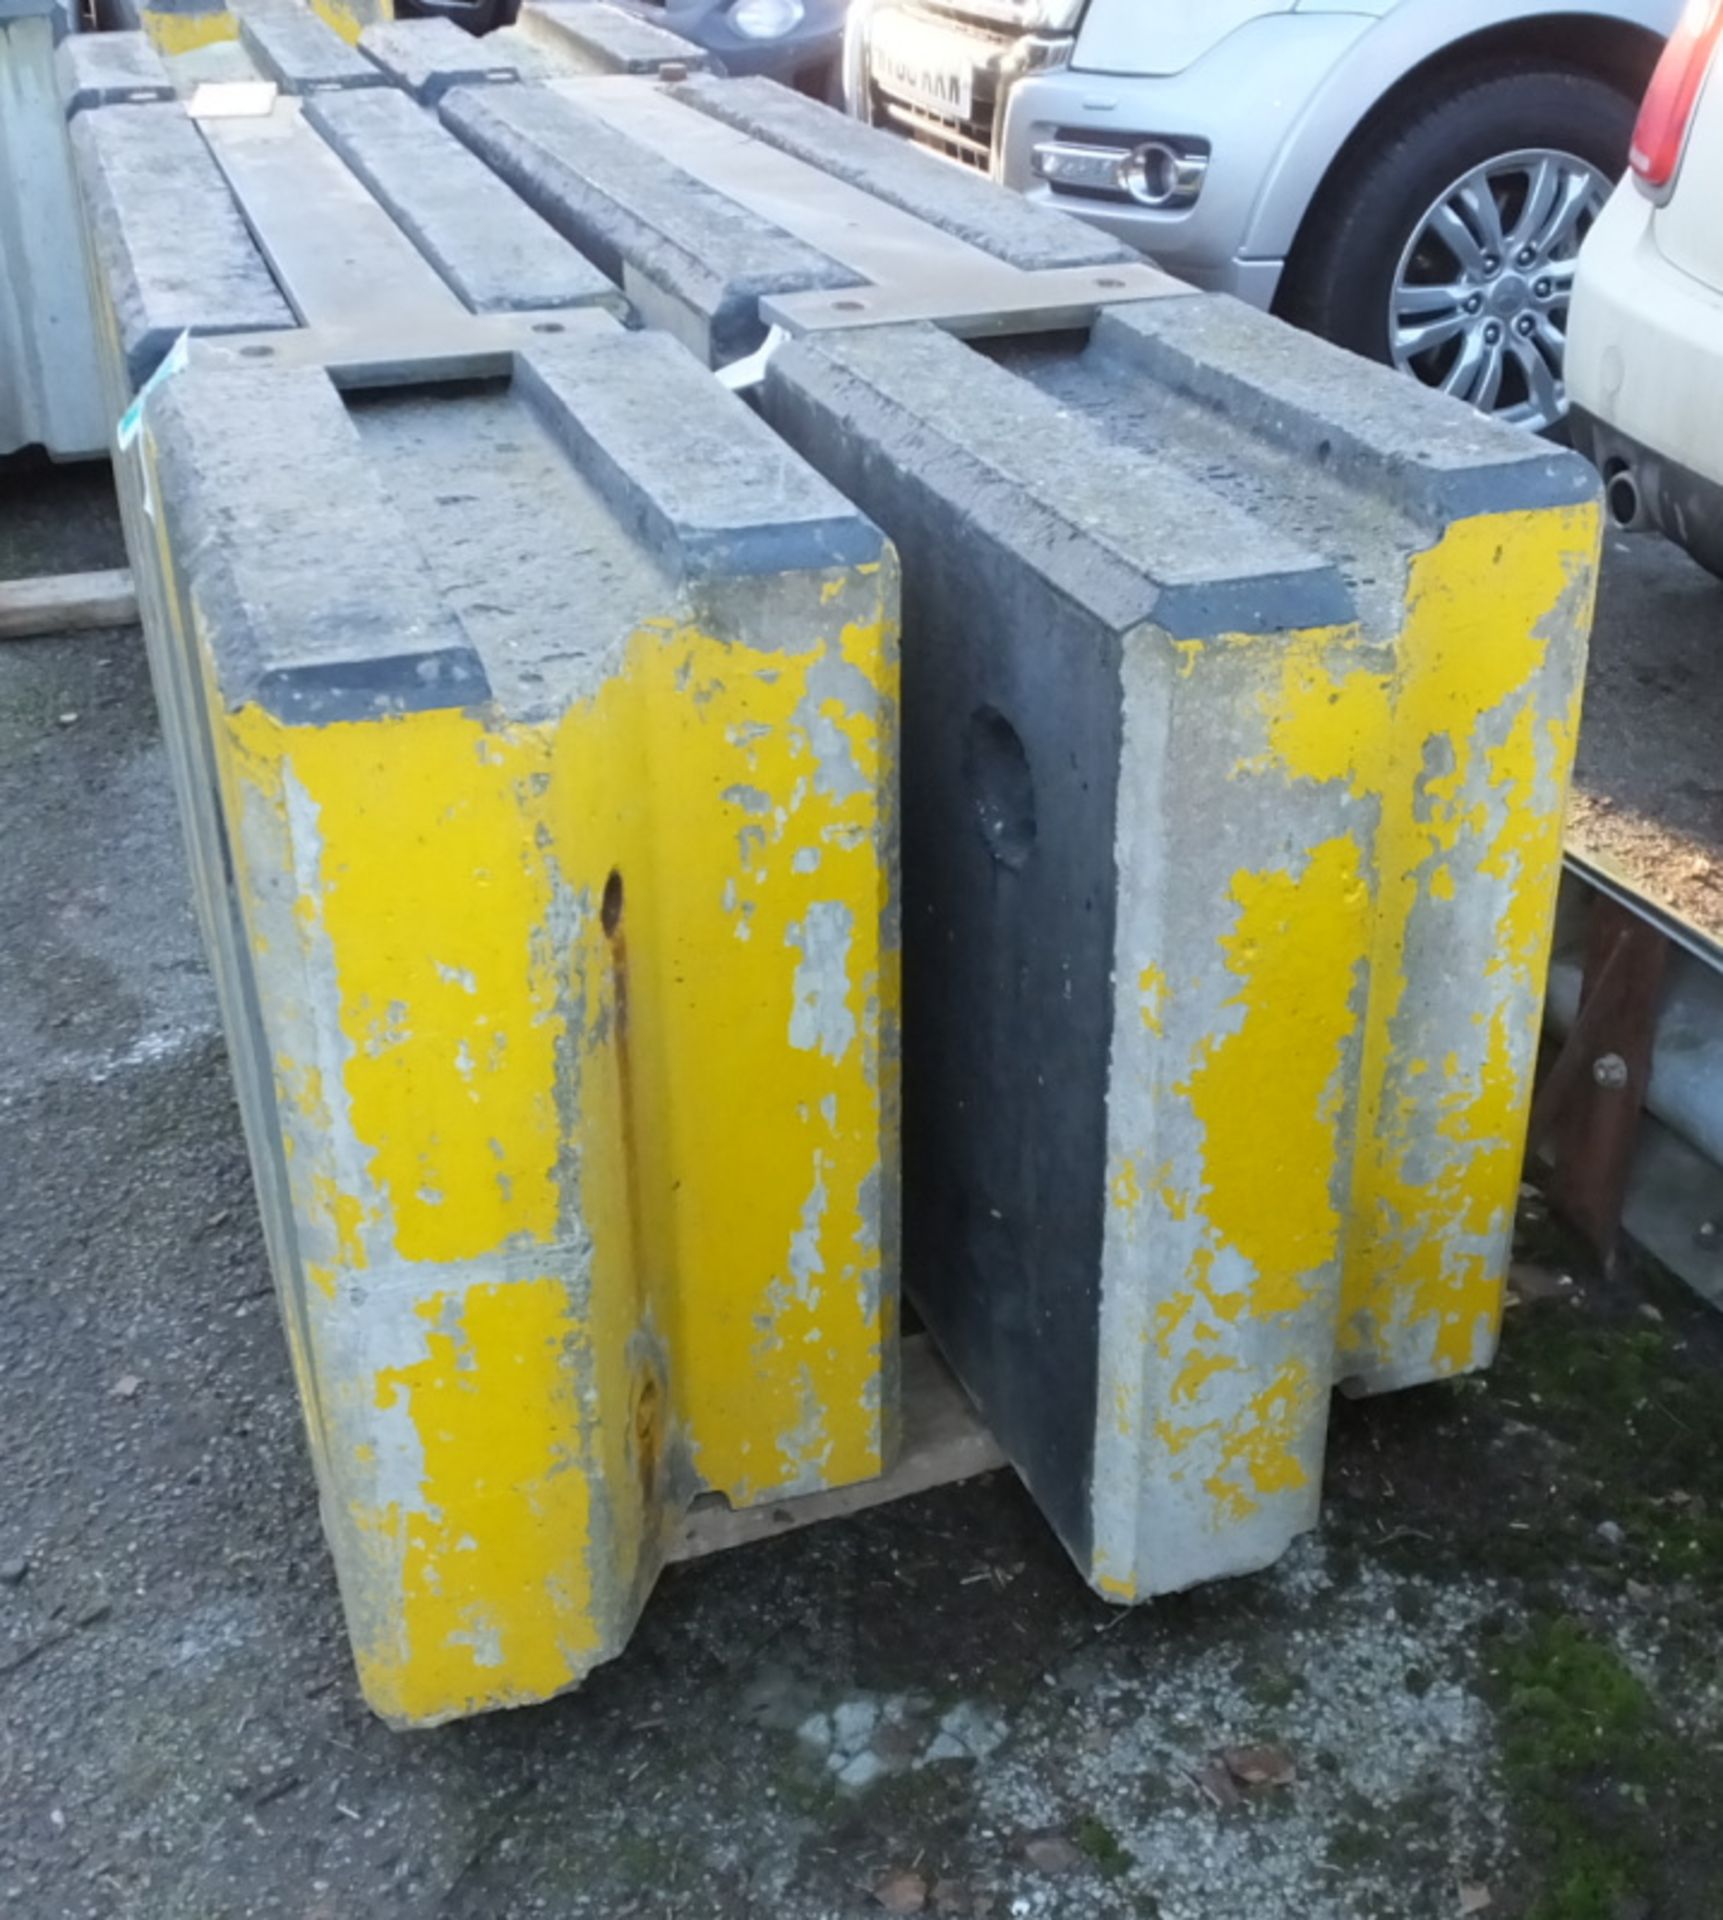 2x Heavy Duty Vertical Concrete Barriers W 3110 x D 460 x H 900mm - Each Block weighs appr - Image 2 of 3